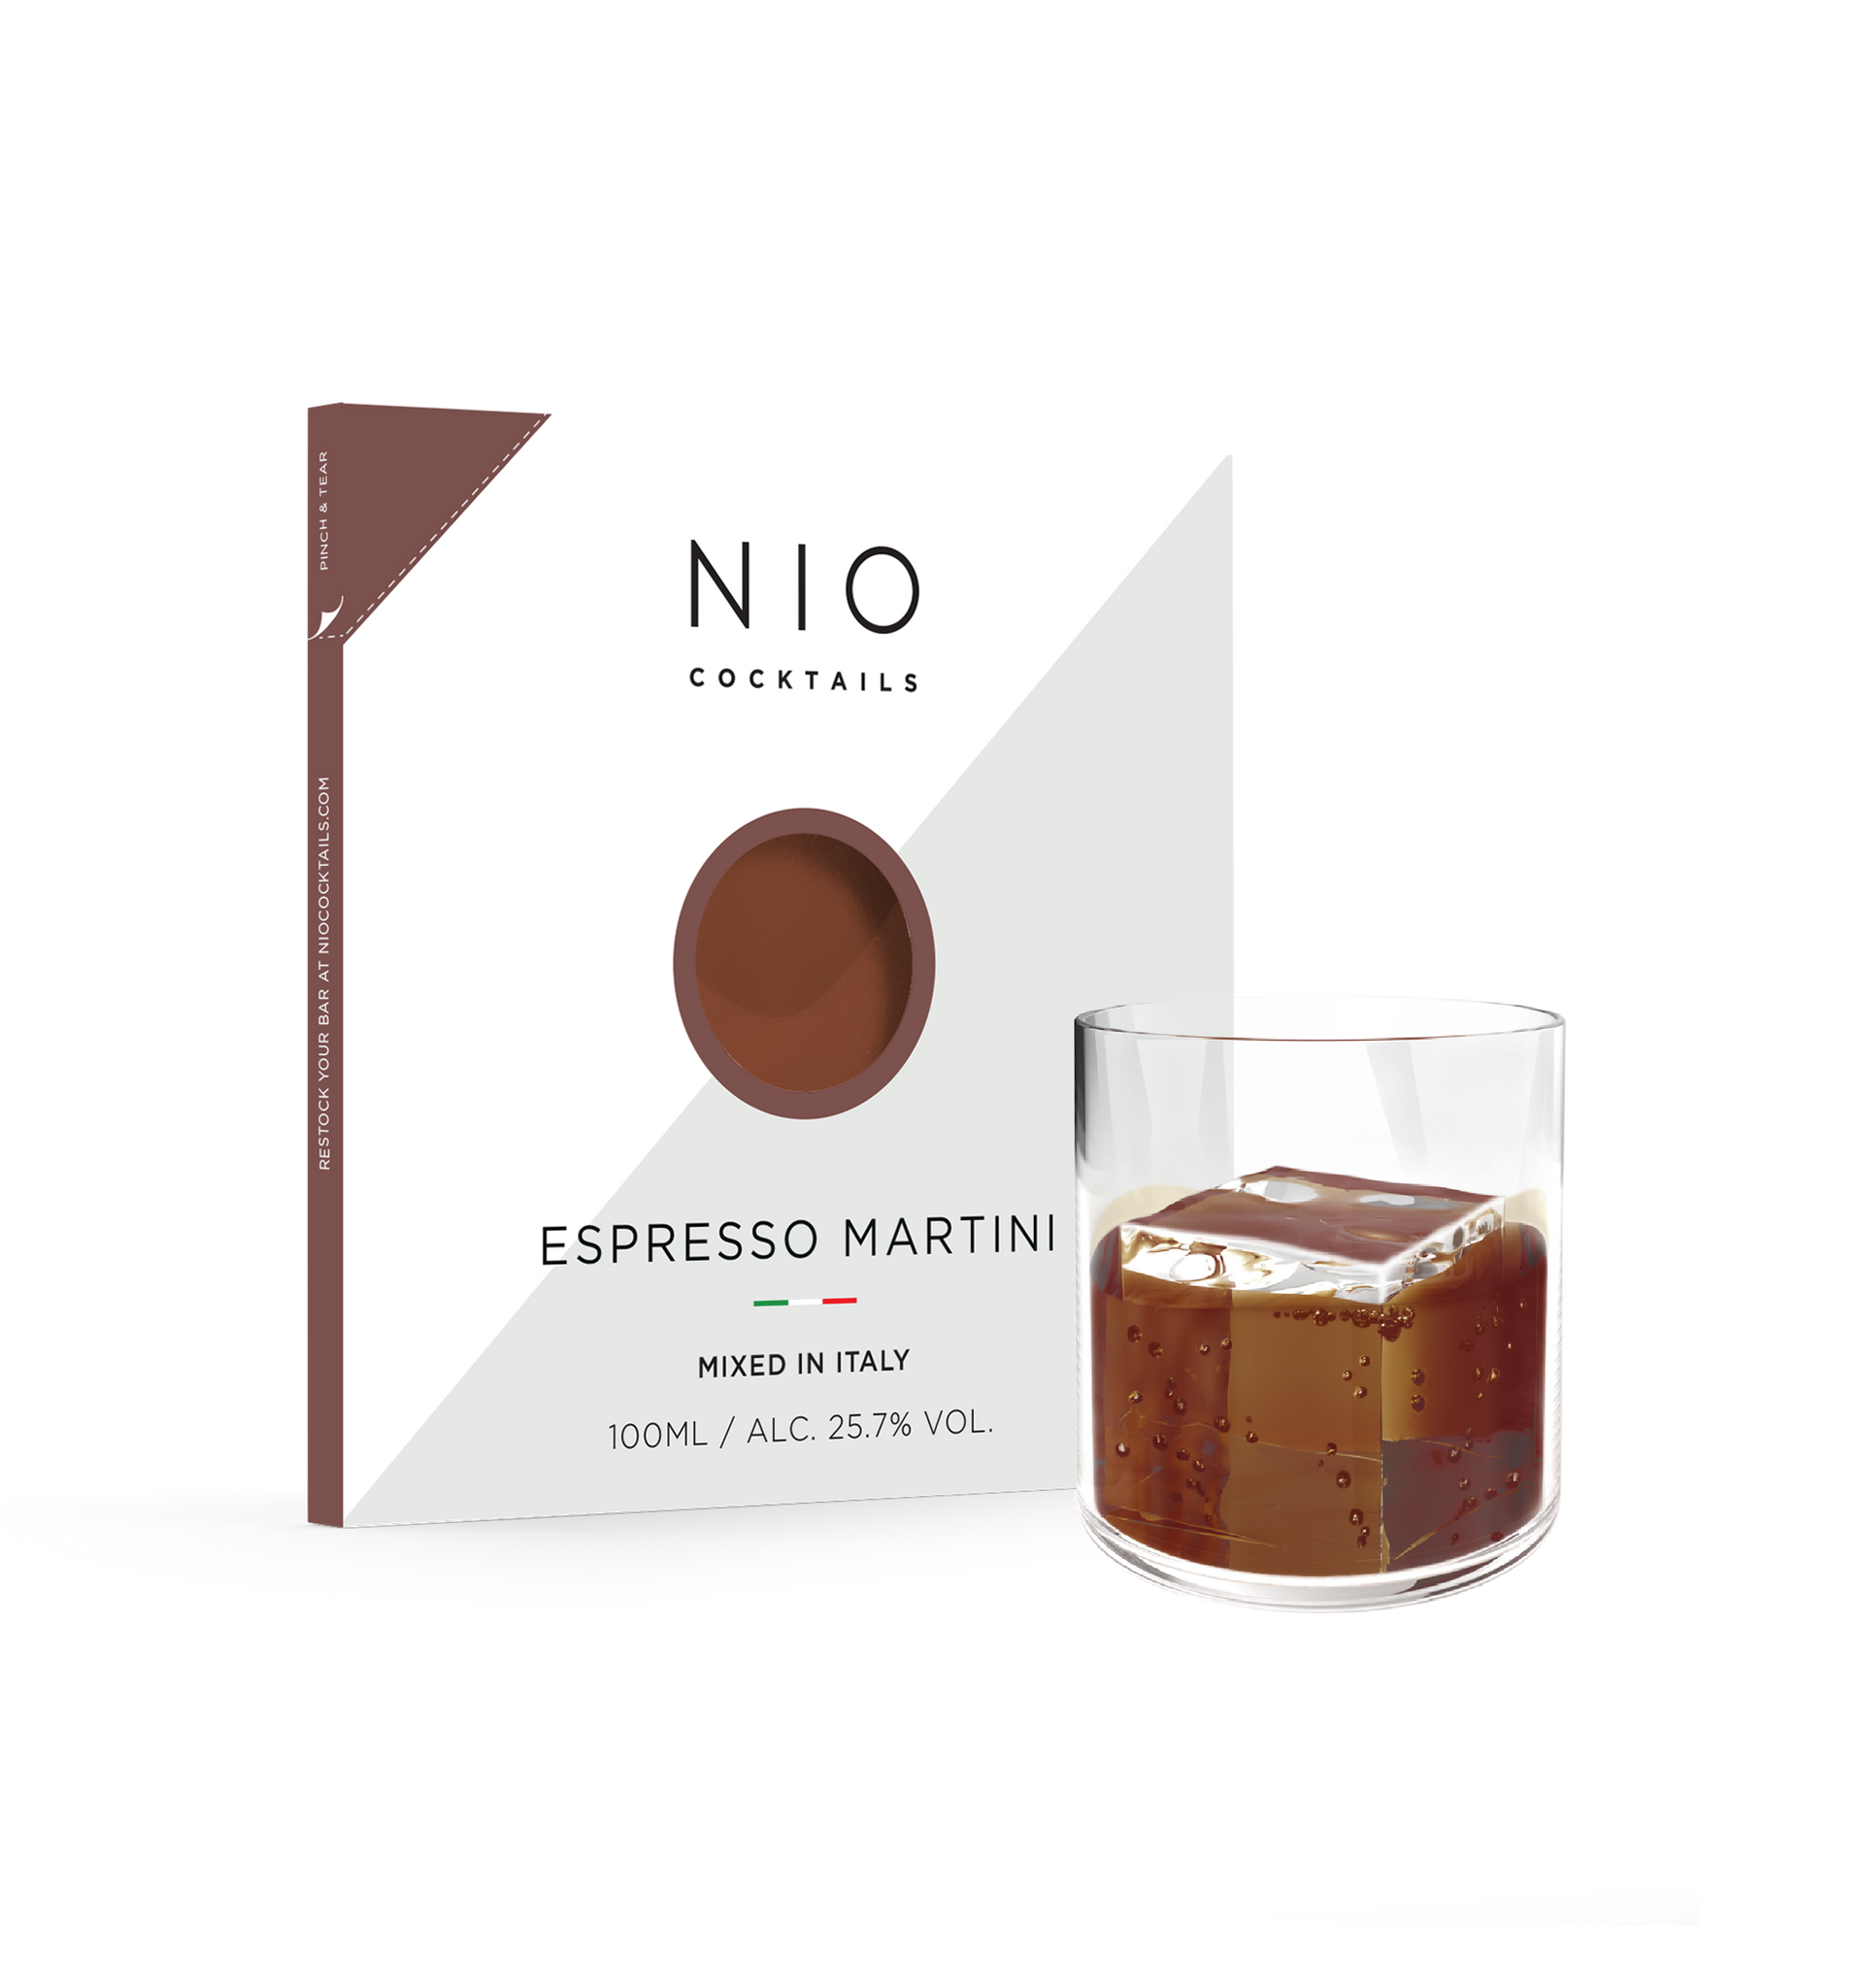 NIO Cocktails Espresso Martini ready to drink